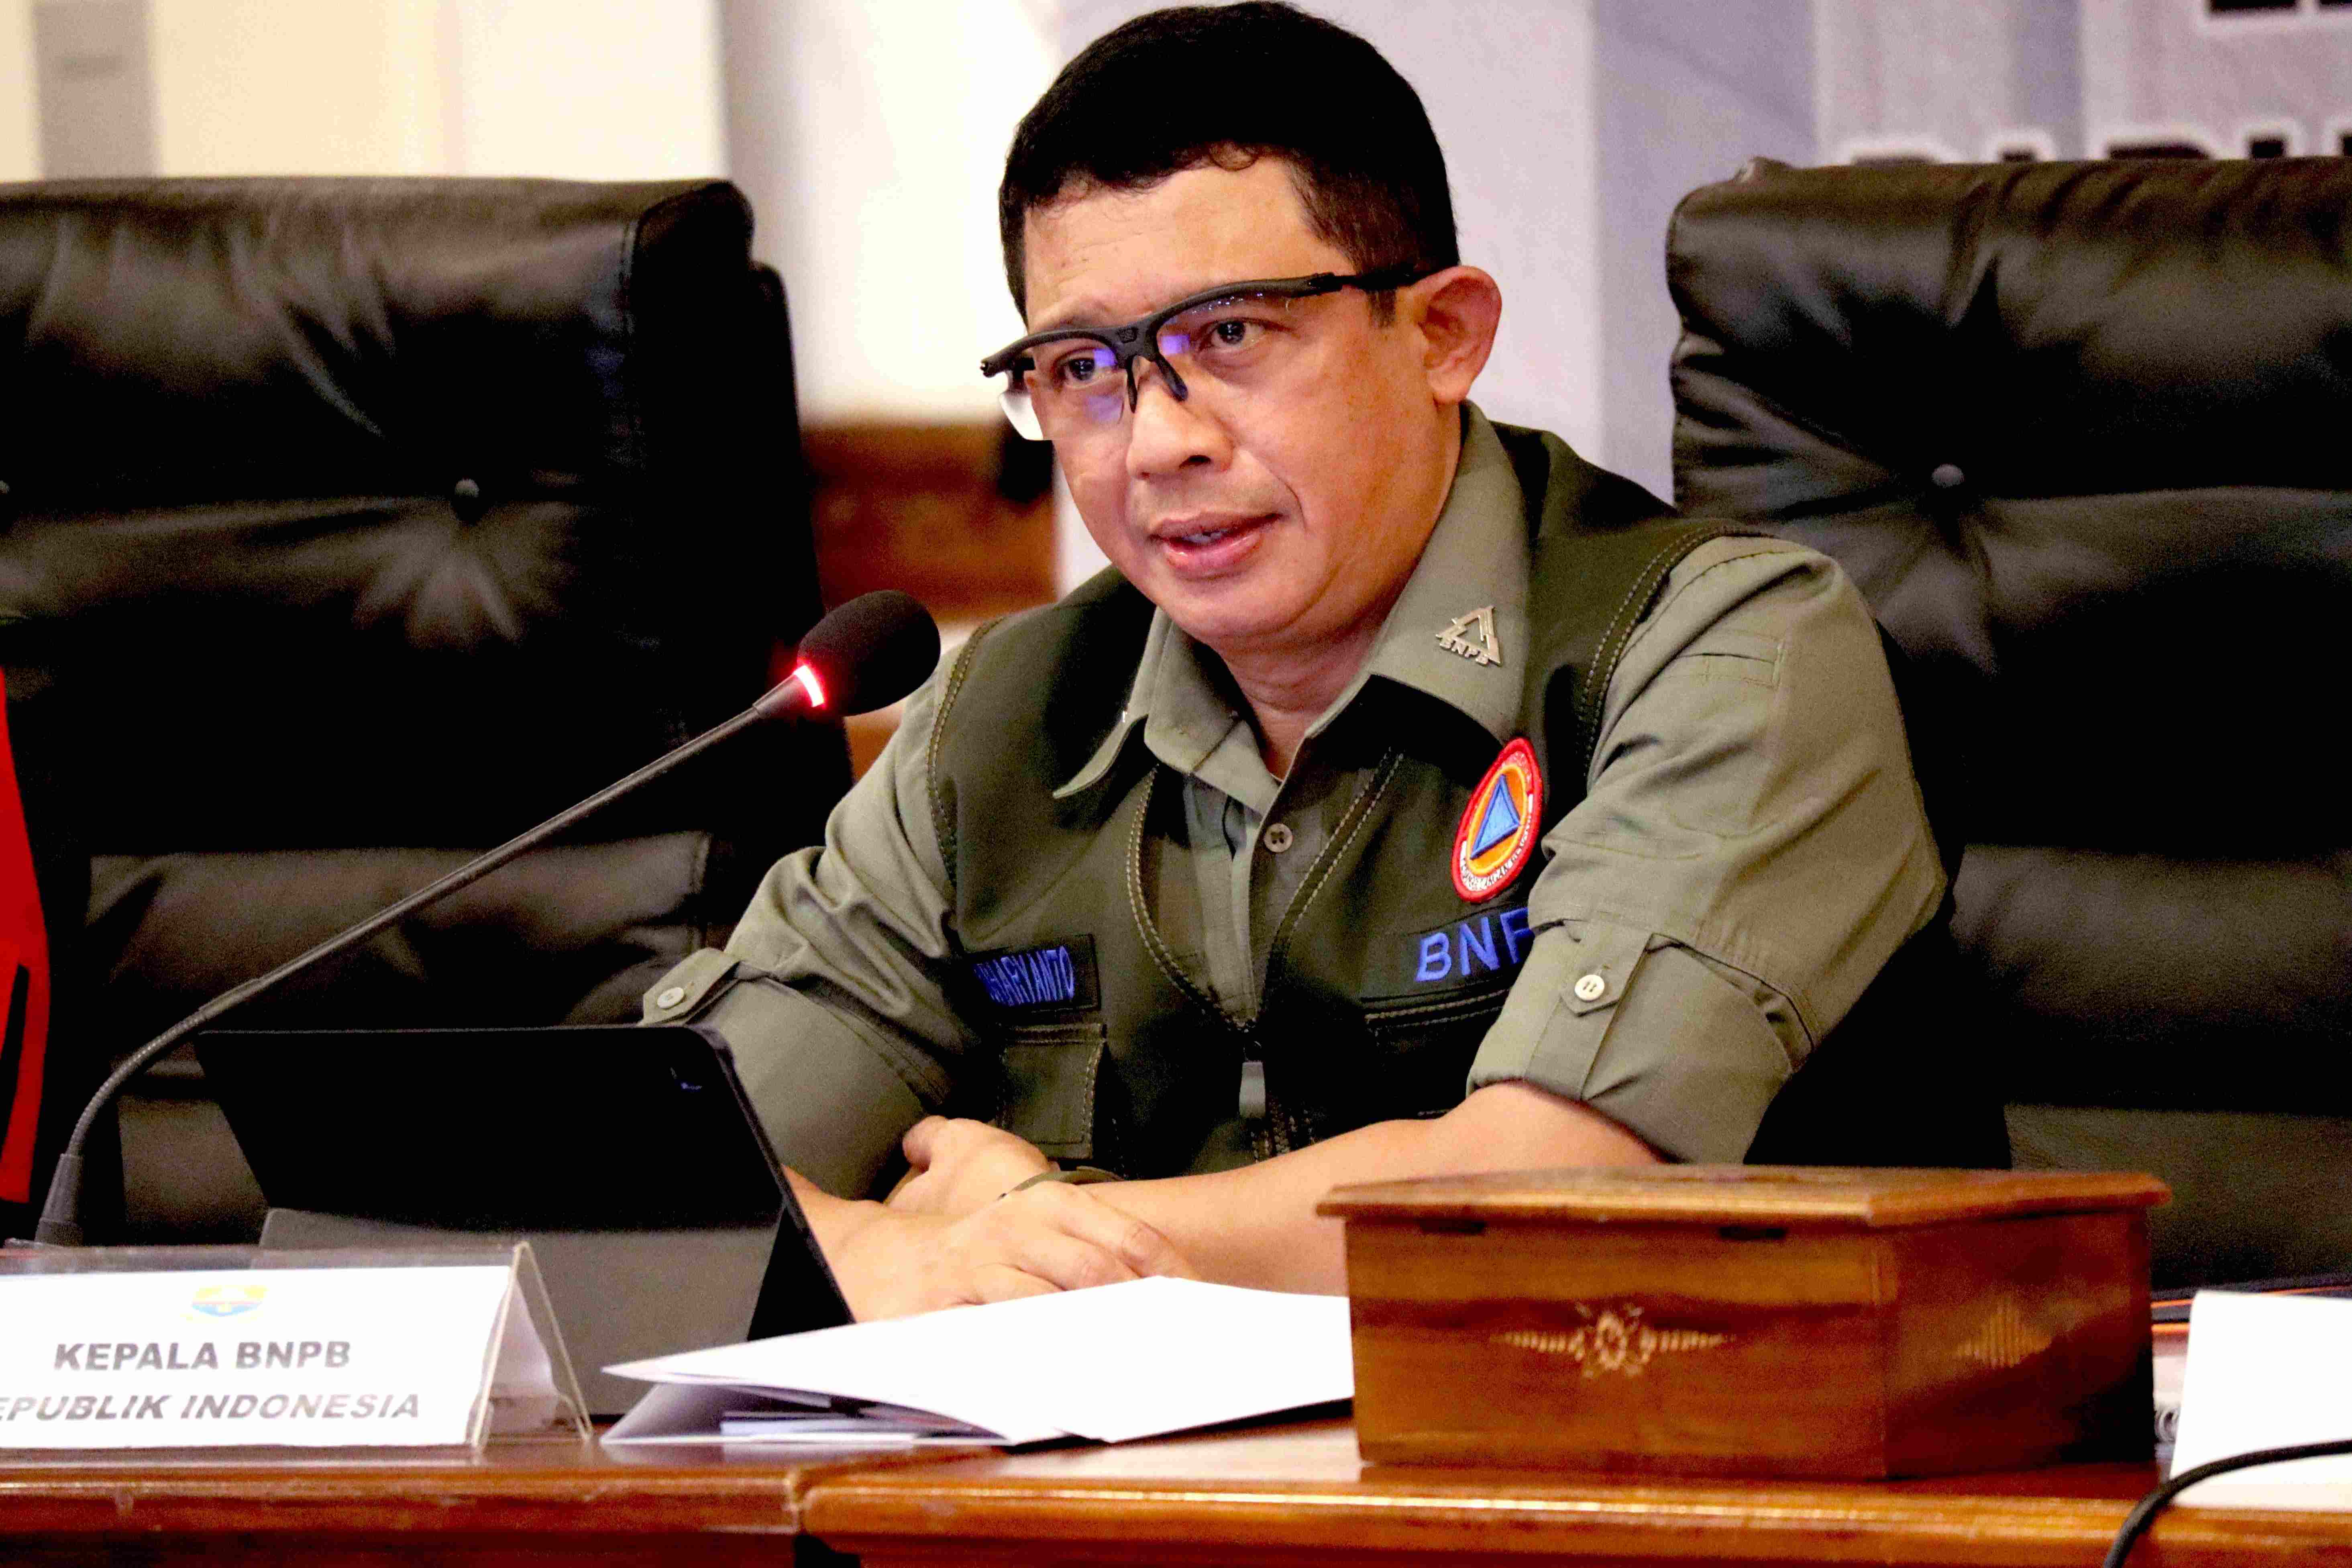 Kepala BNPB Sebut Indonesia Sedang Hadapi Anomali Bencana Alam